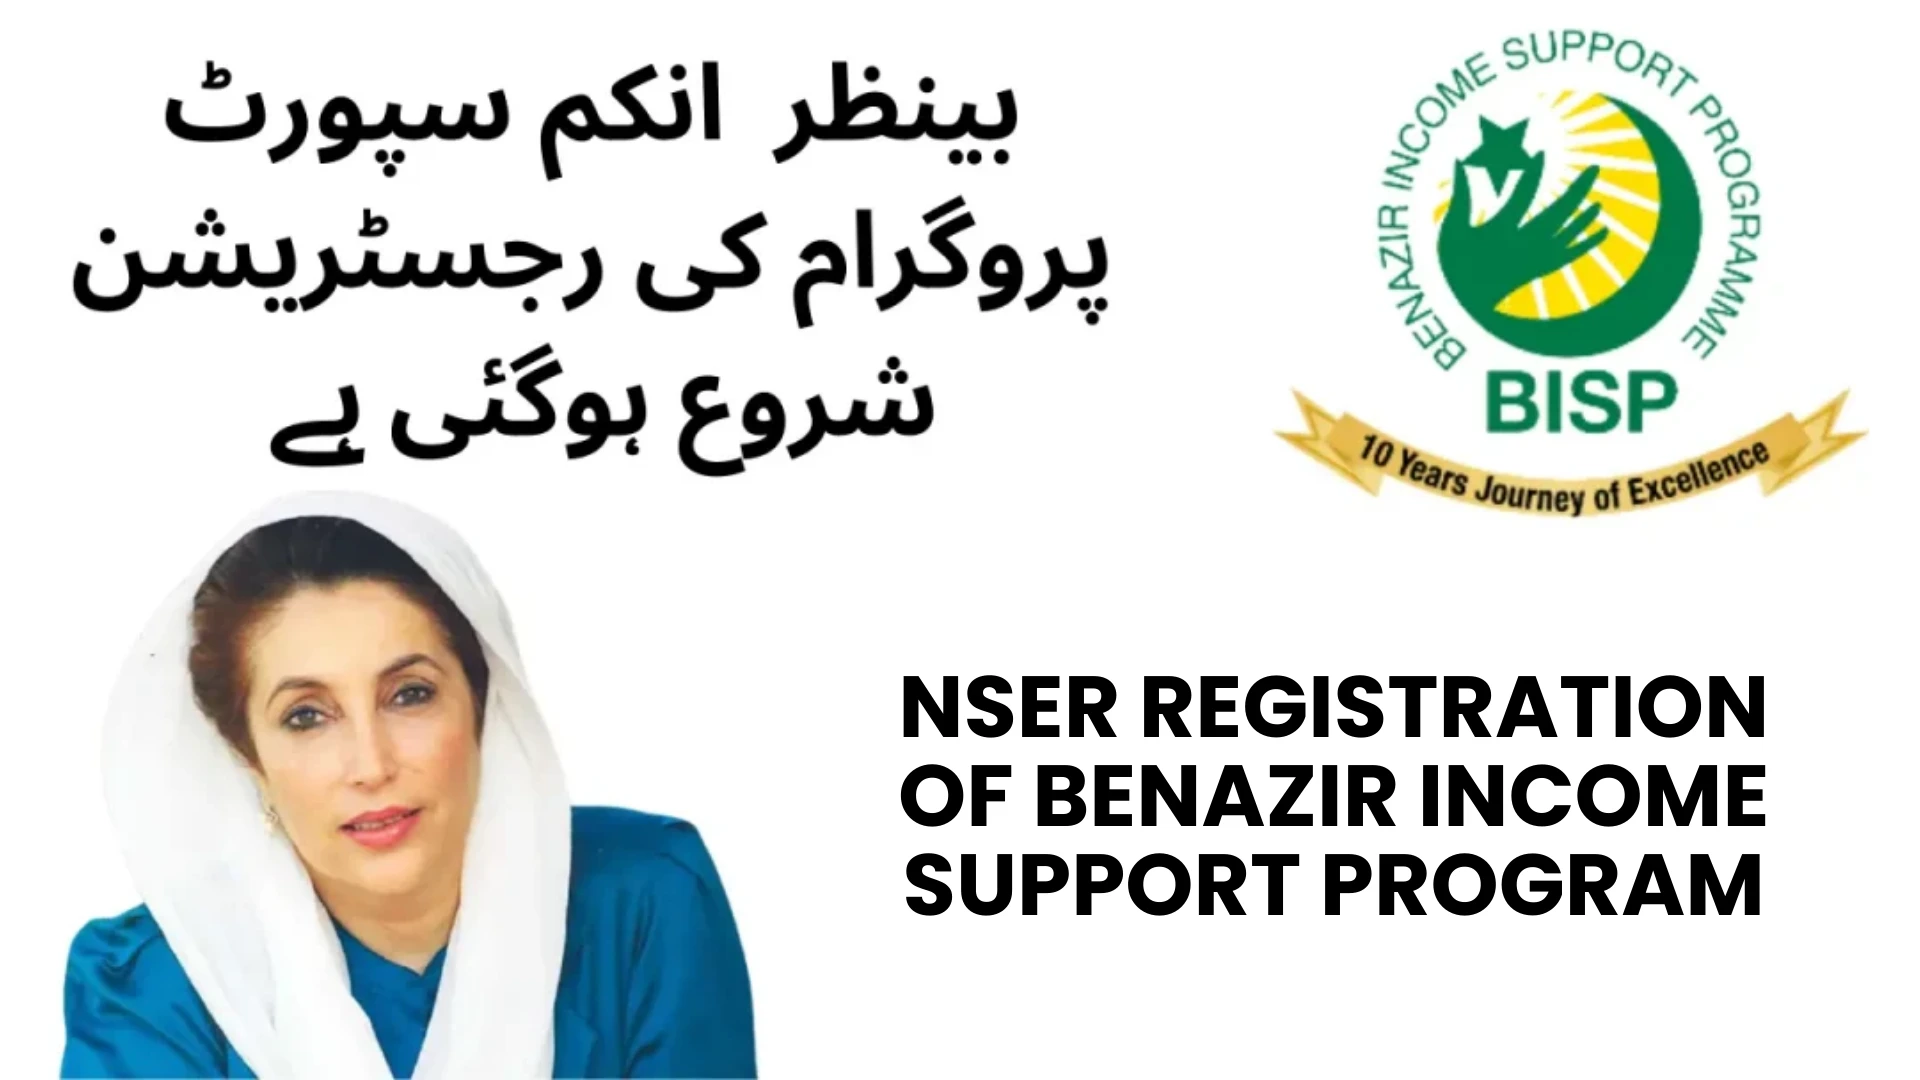 NSER Registration of Benazir Income Support Program